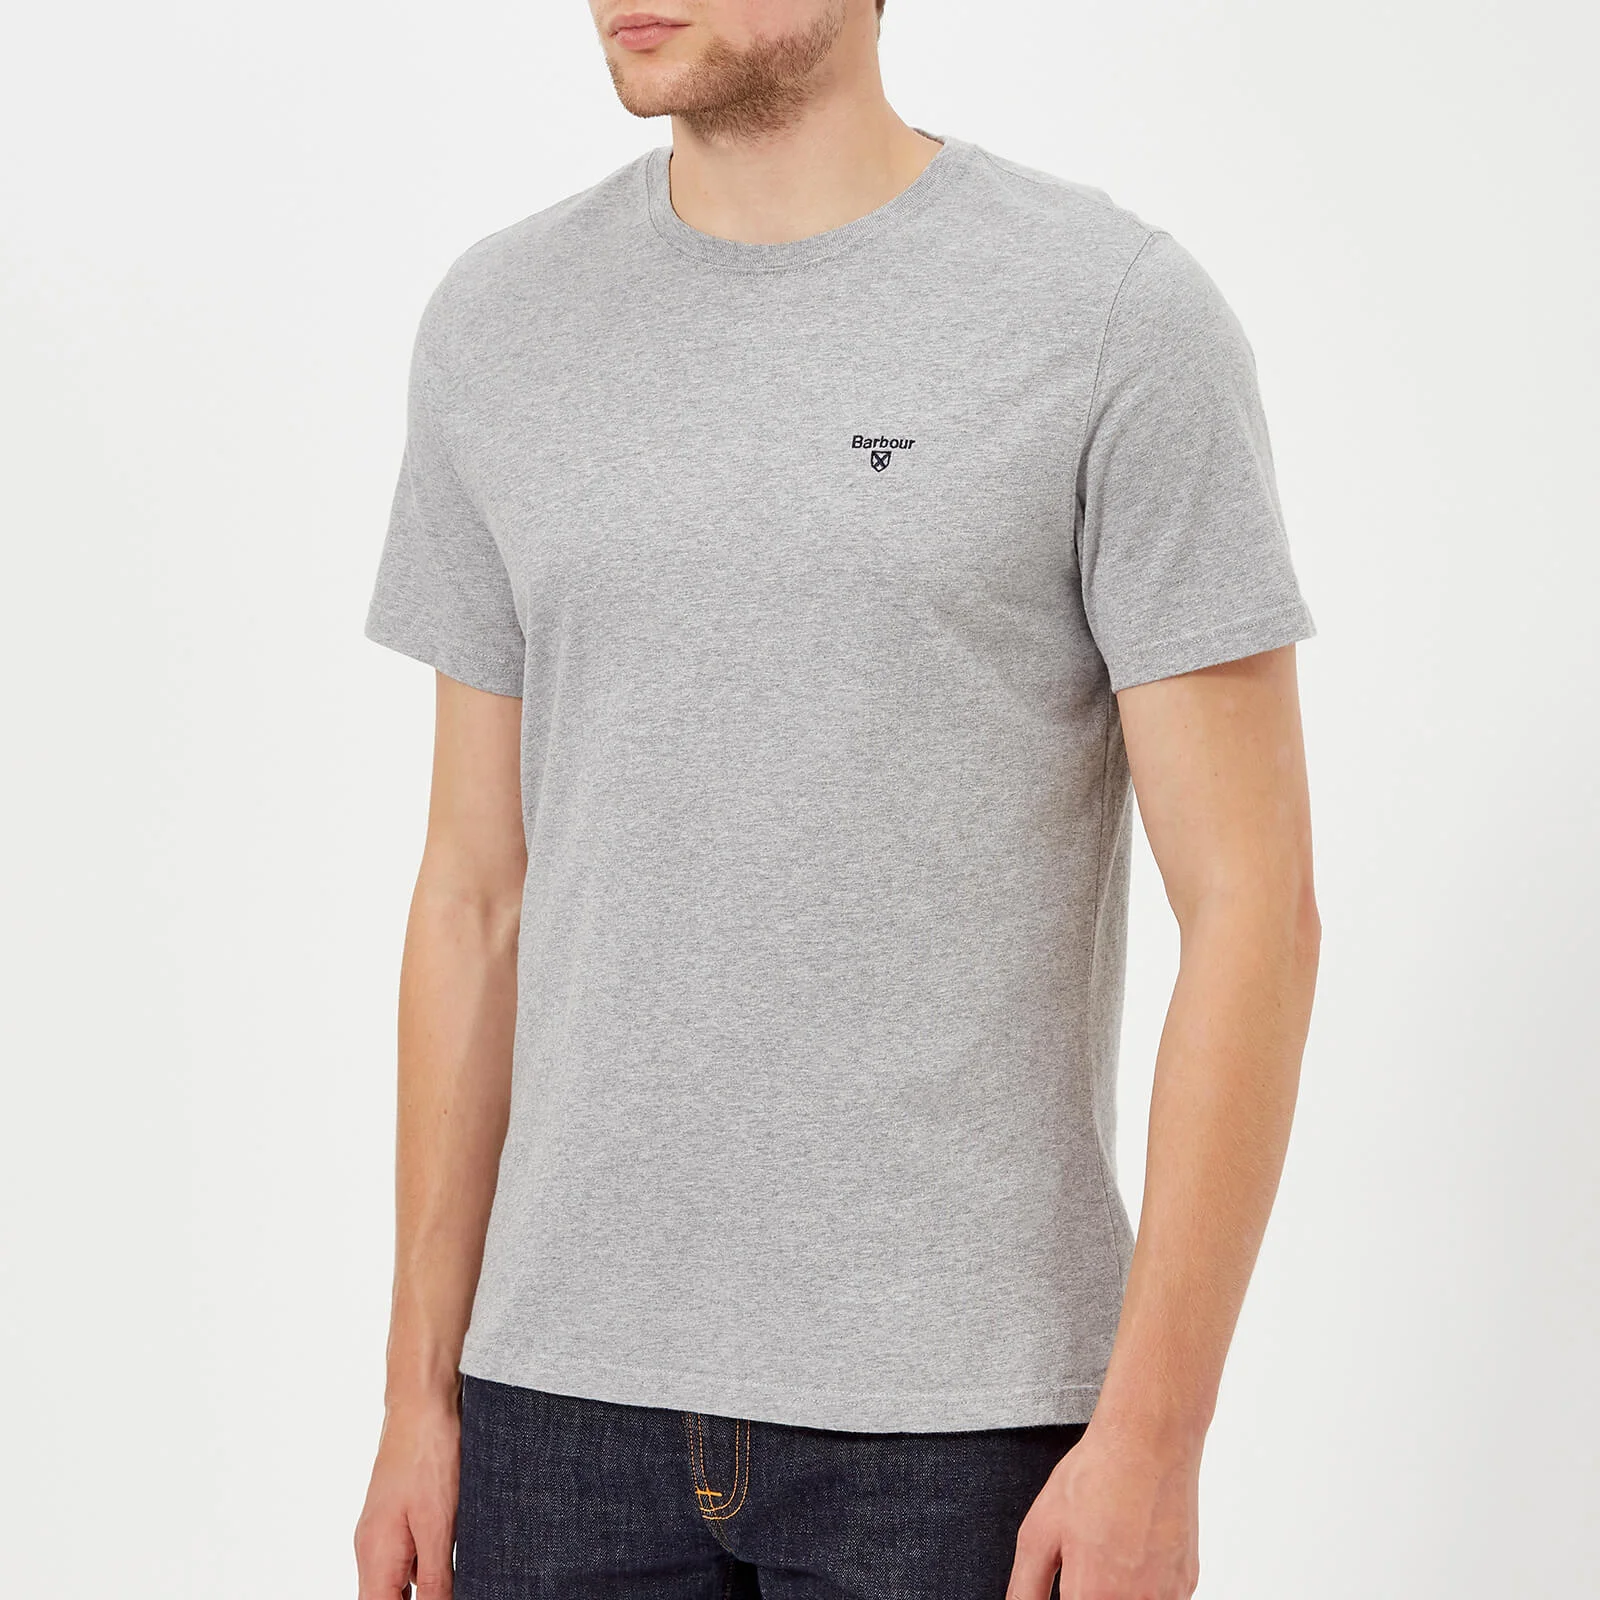 Barbour Men's Sports T-Shirt - Grey Marl Image 1